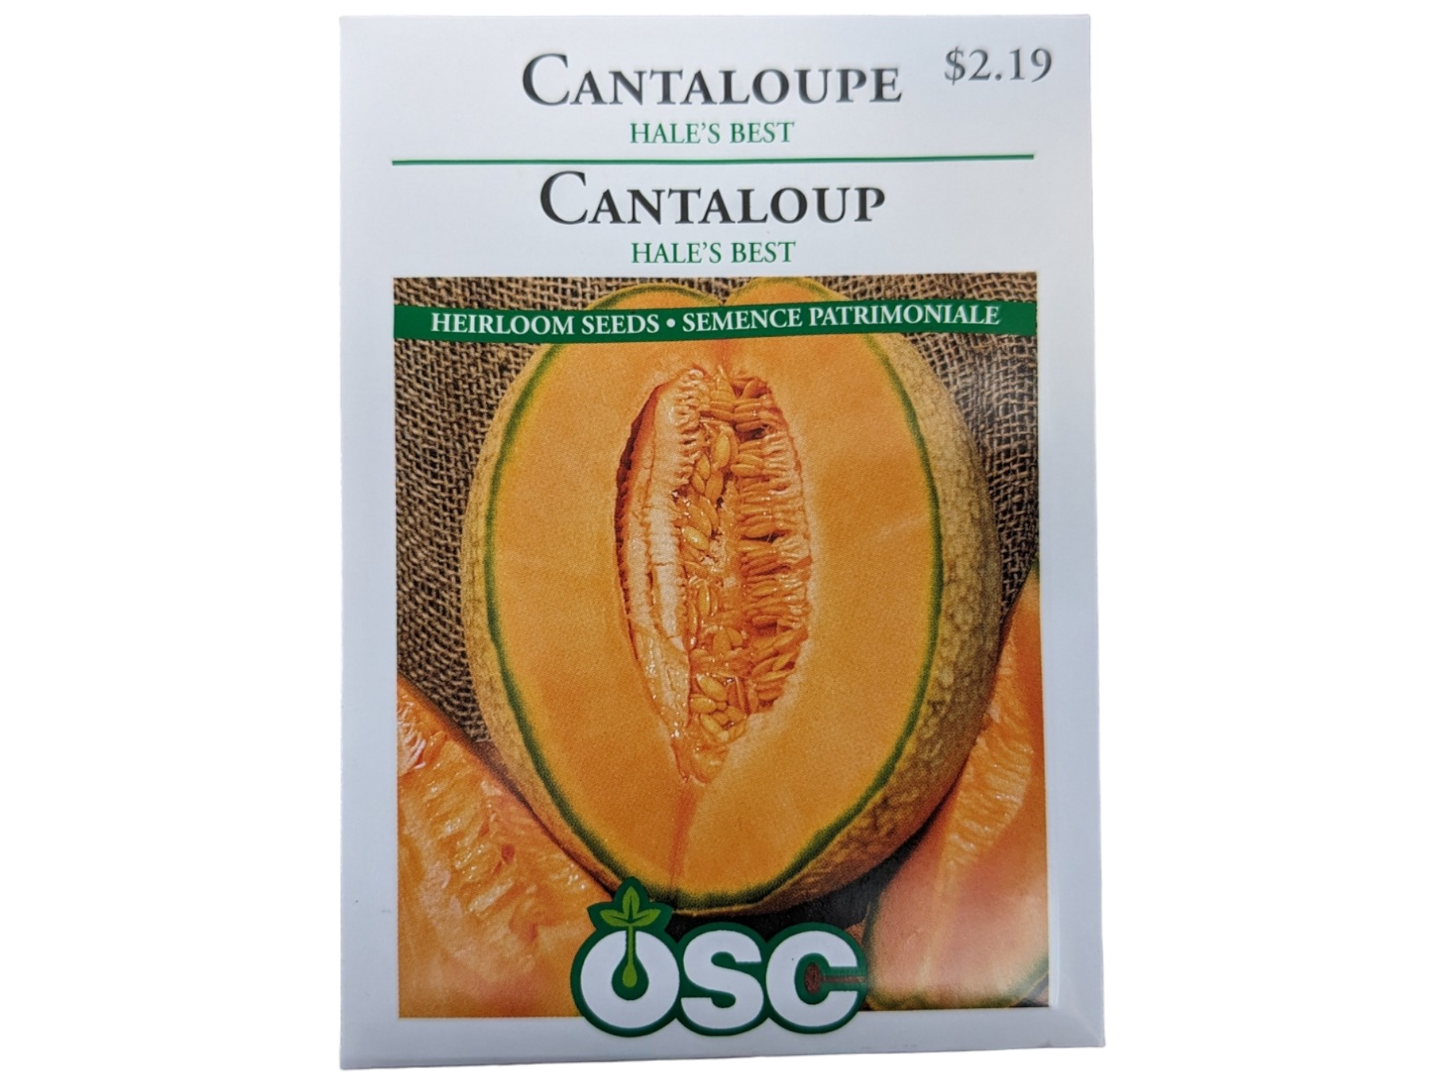 Cantaloupe - Hale's Best